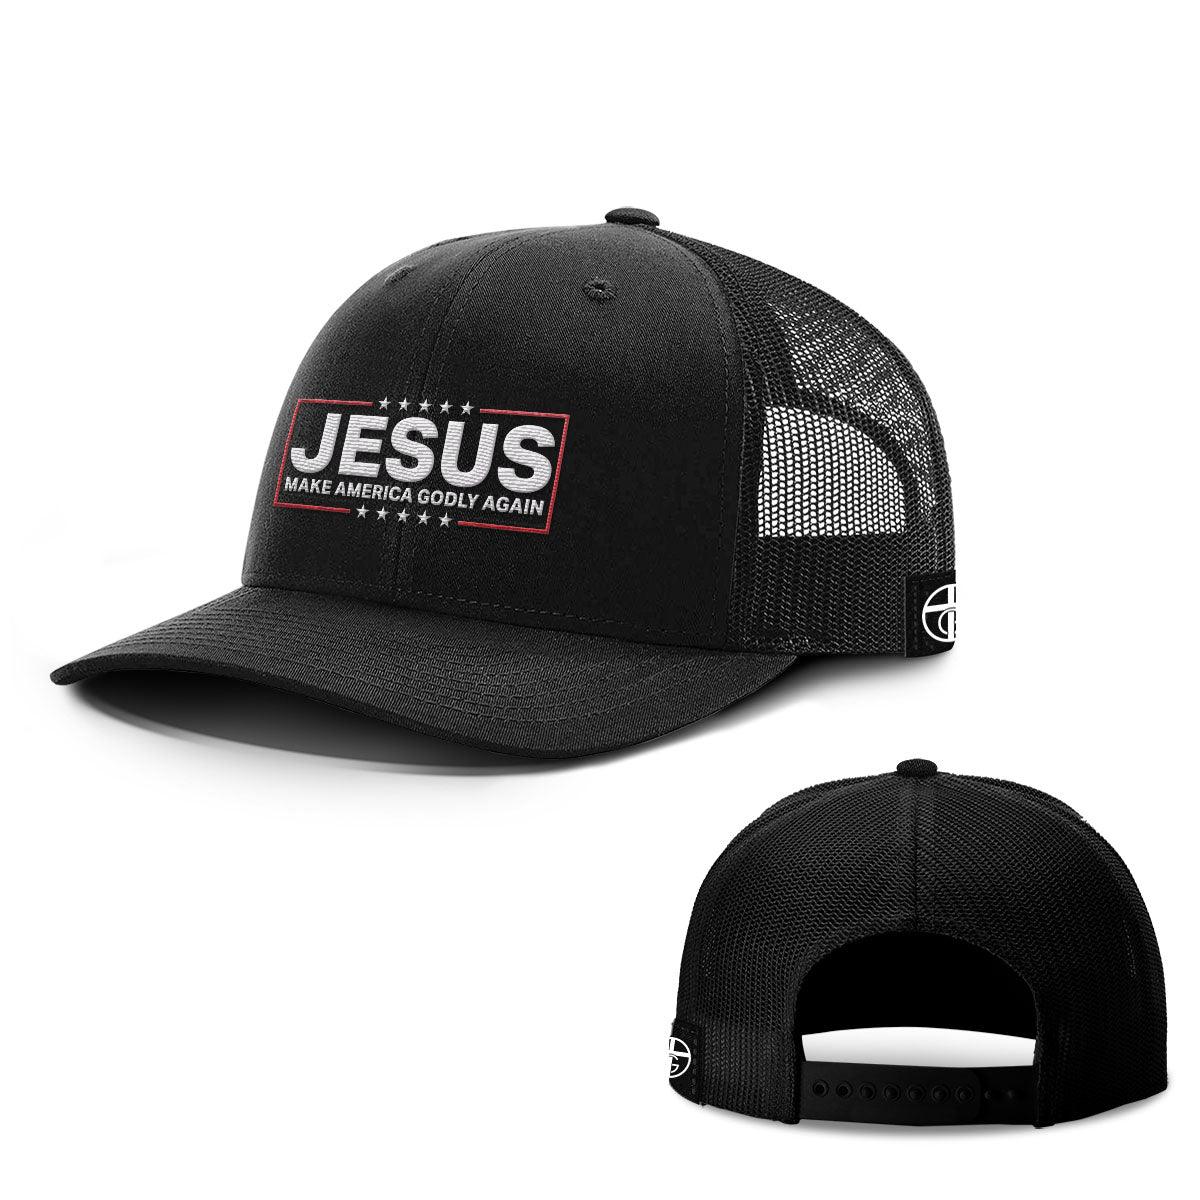 Jesus Make America Godly Again Hats - Our True God